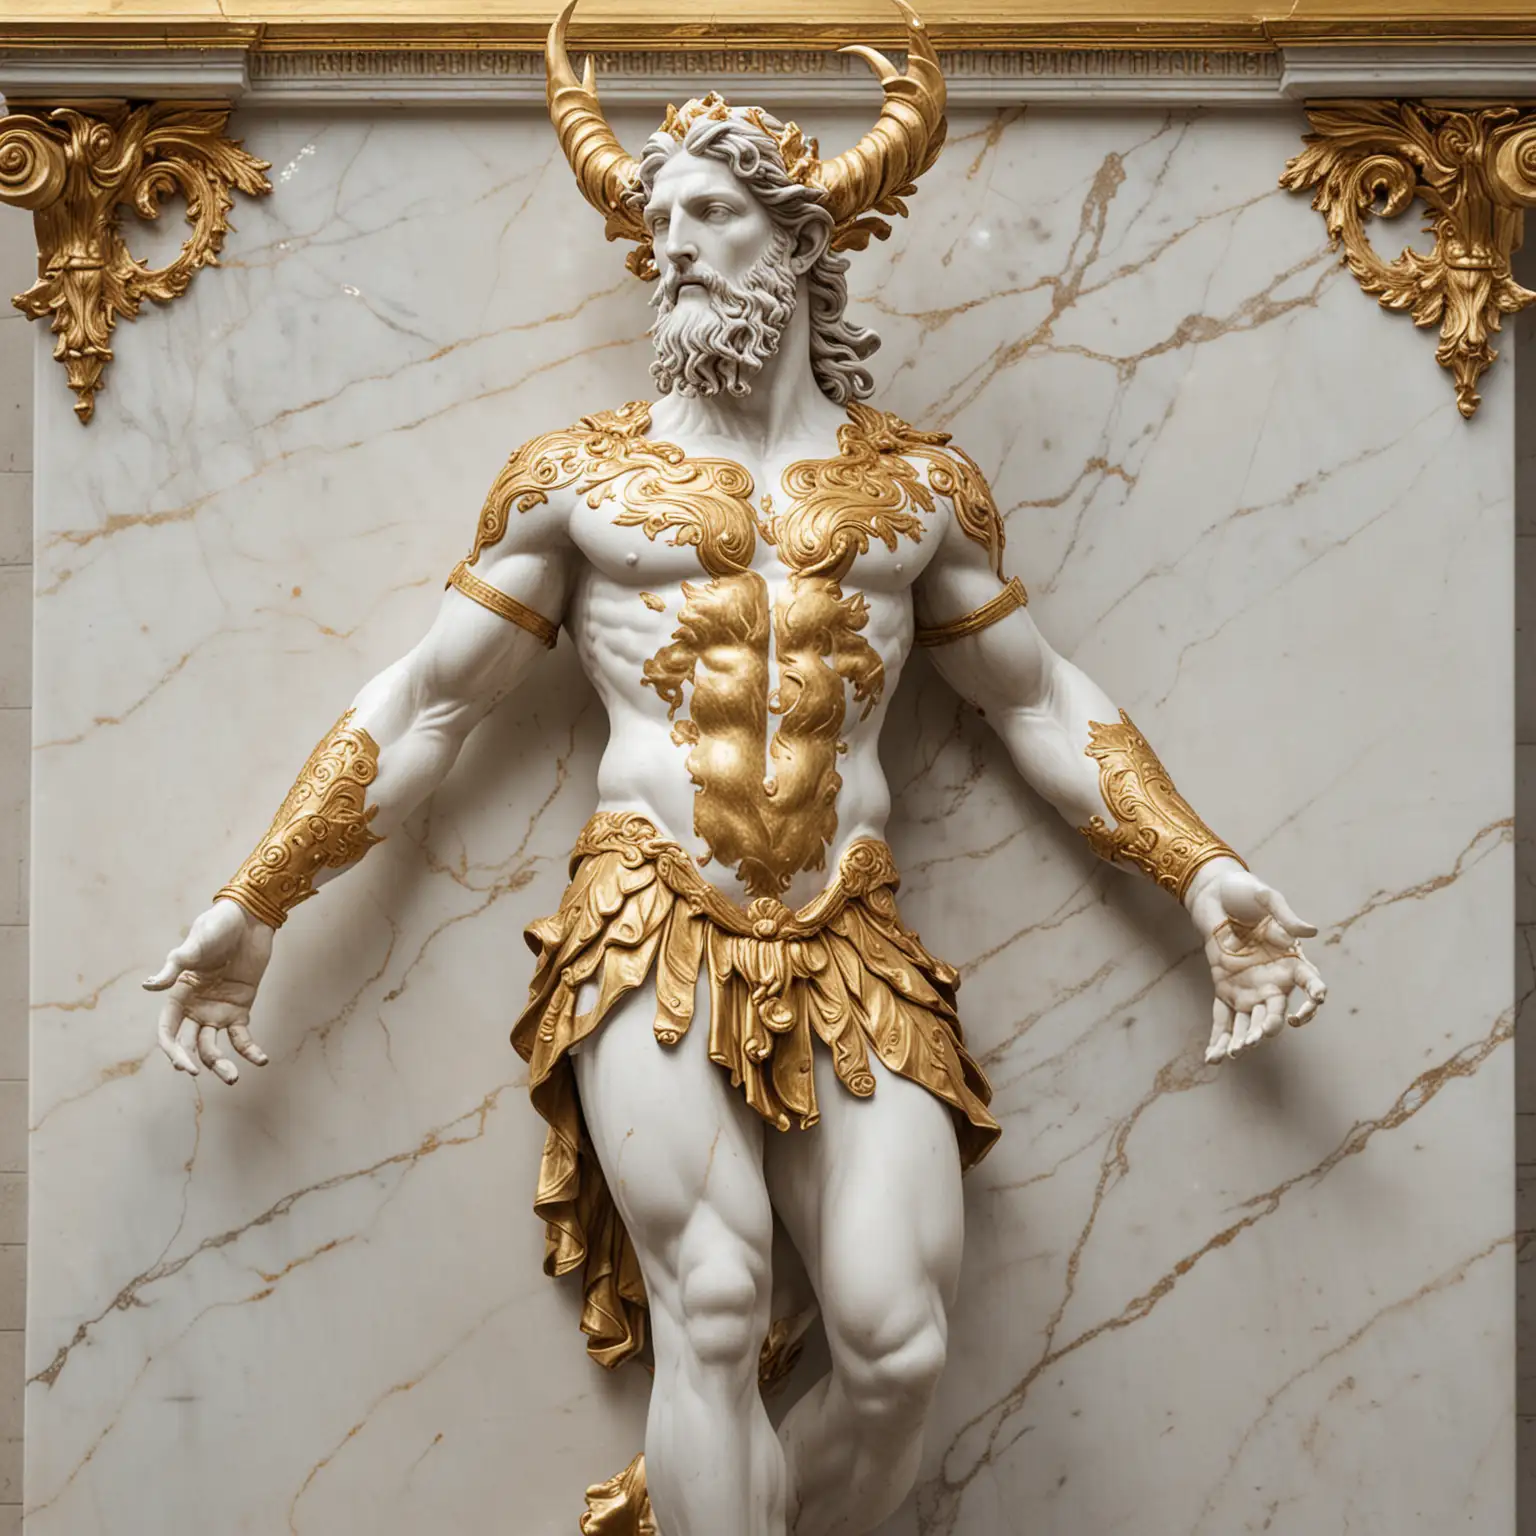 Marble Statue of Cernunnos Adorned with Gold Leaf Patterns